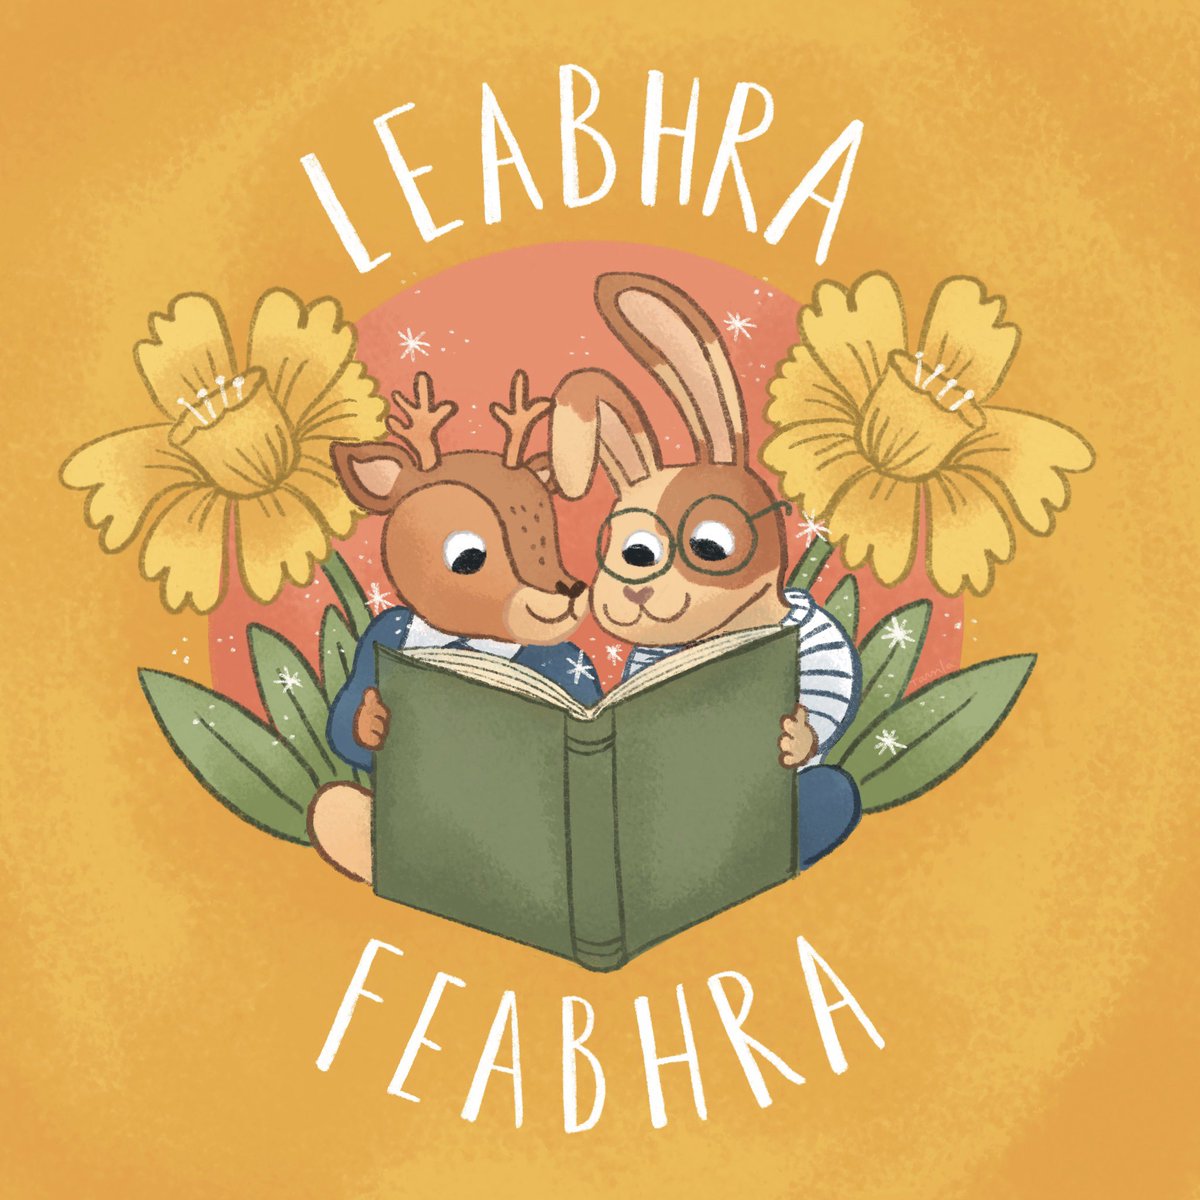 During February in Ireland we celebrate “Leabhra Feabhra” - February Books in Irish ☘️ This month share YOUR LOVE of Leabhair an Ghaeilge & Irish Book creators - writers, illustrators (like me!) publishers and more!
#LeabhraFeabhra #Gaeilge #BuyLeabharGaeilge #BooksAsGaeilge